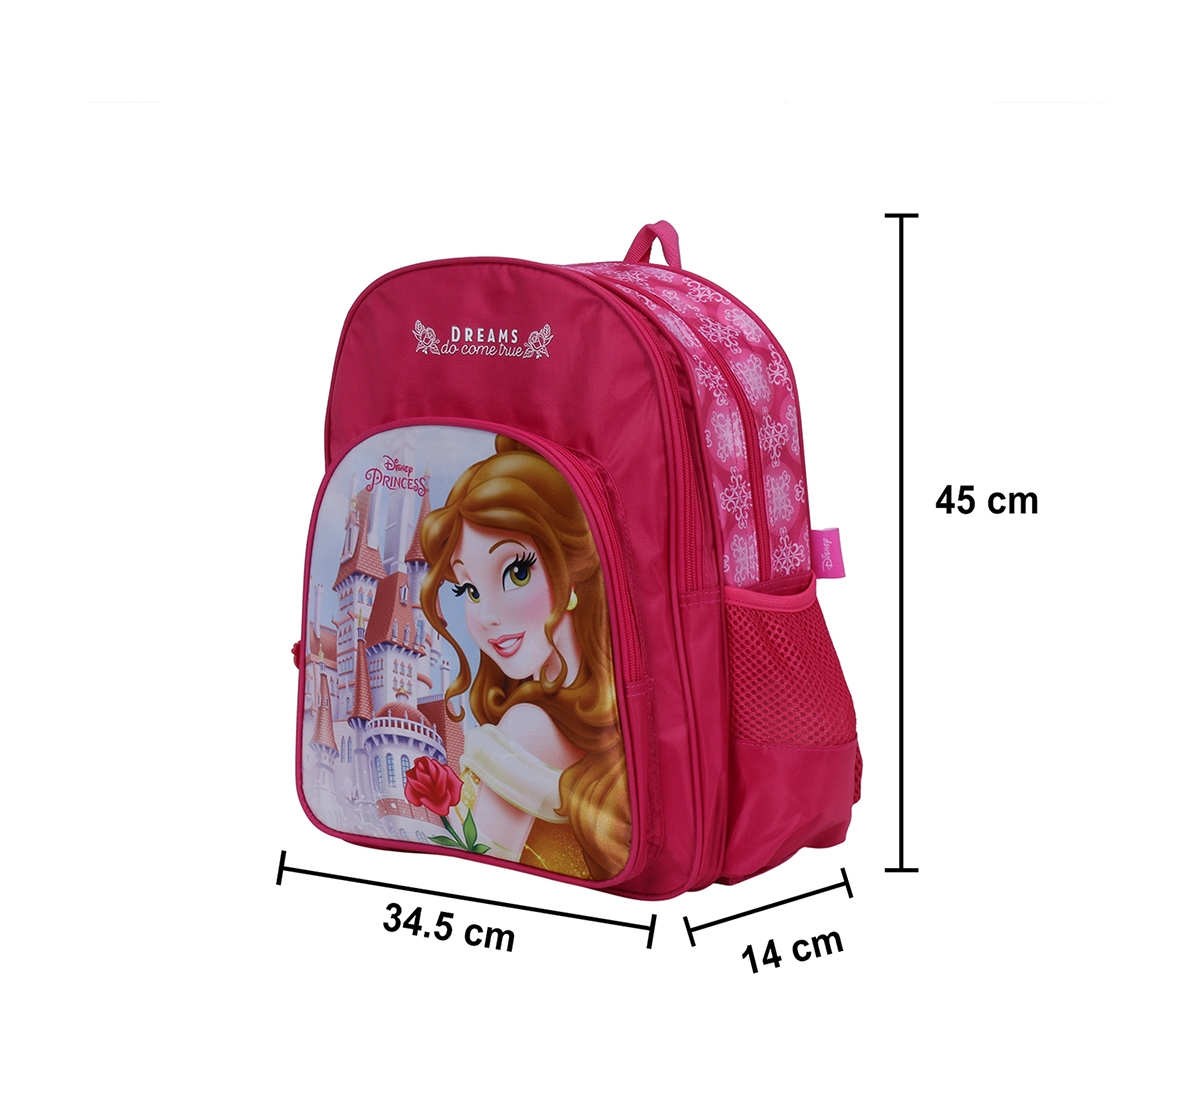 DISNEY | Disney Princess Castle 18" Backpack Bags for Girls age 3Y+  6